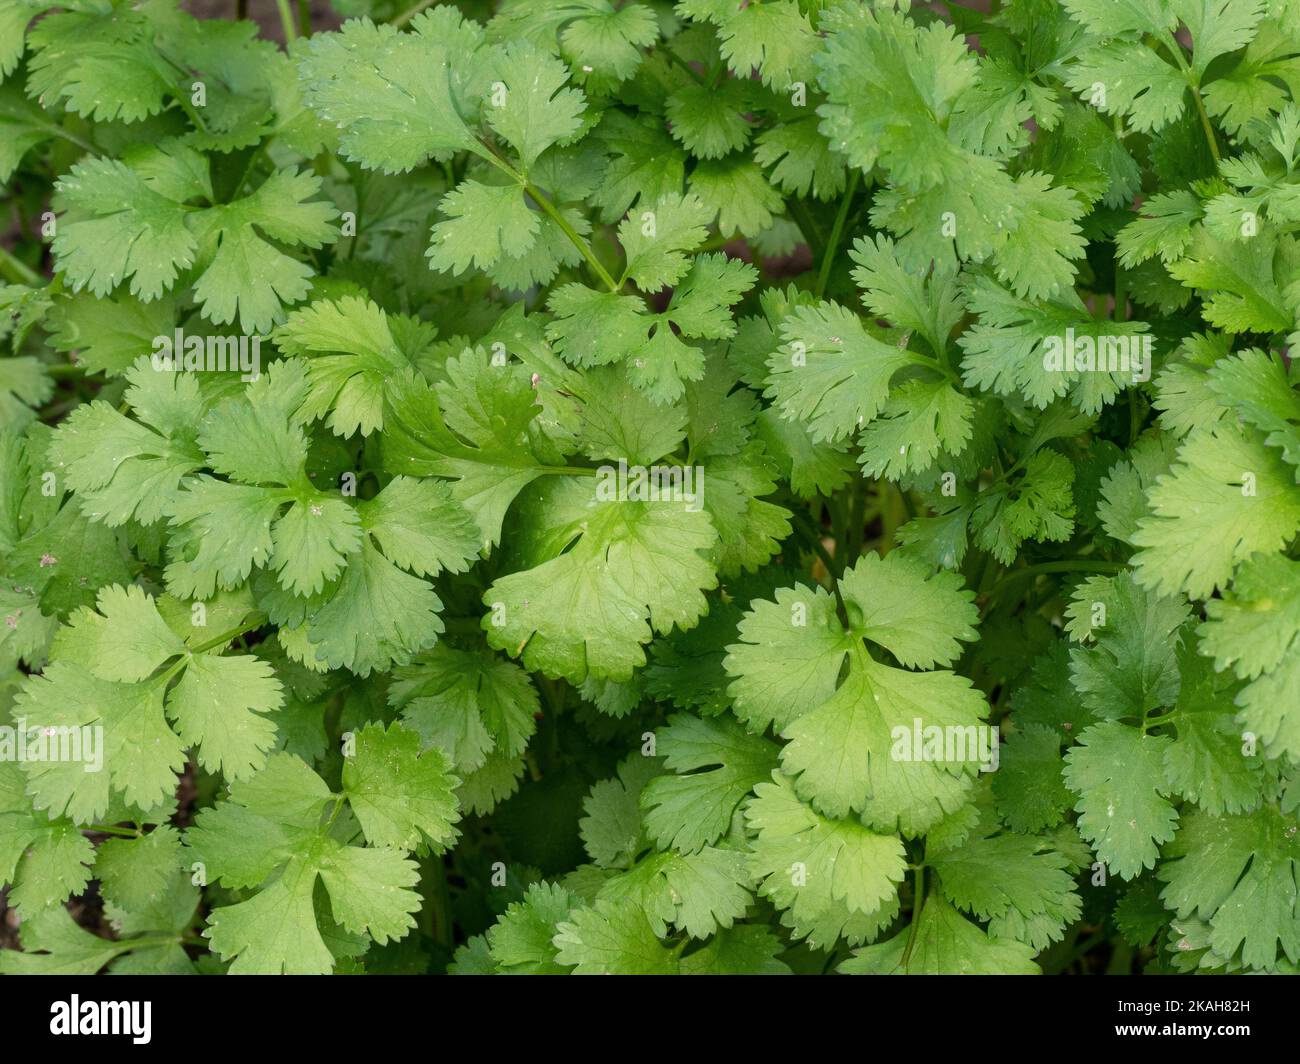 Un primer plano del follaje verde cortado del cilantro - Coriandrum sativum Foto de stock